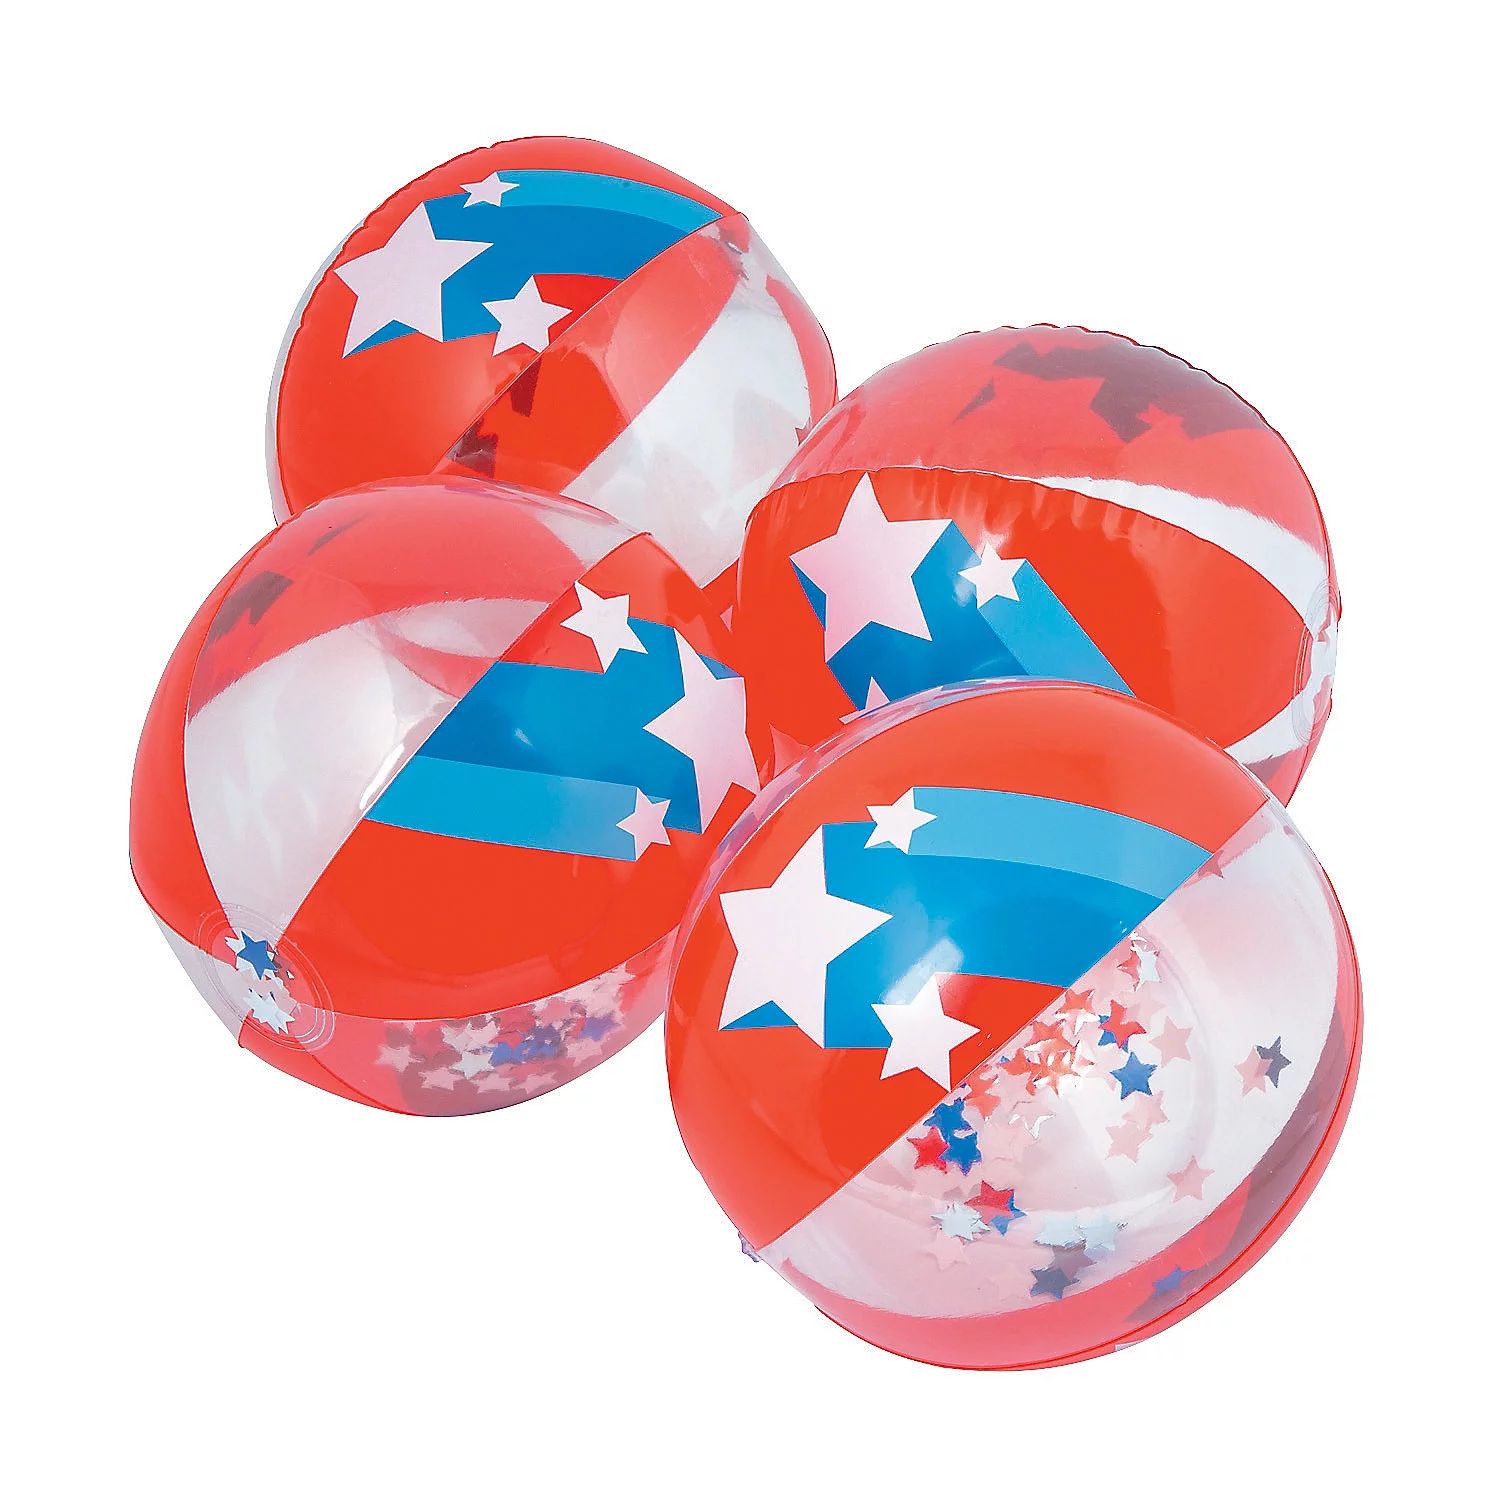 Patriotic Confetti Beach Ball - Party Favors - 12 Pieces | Walmart (US)